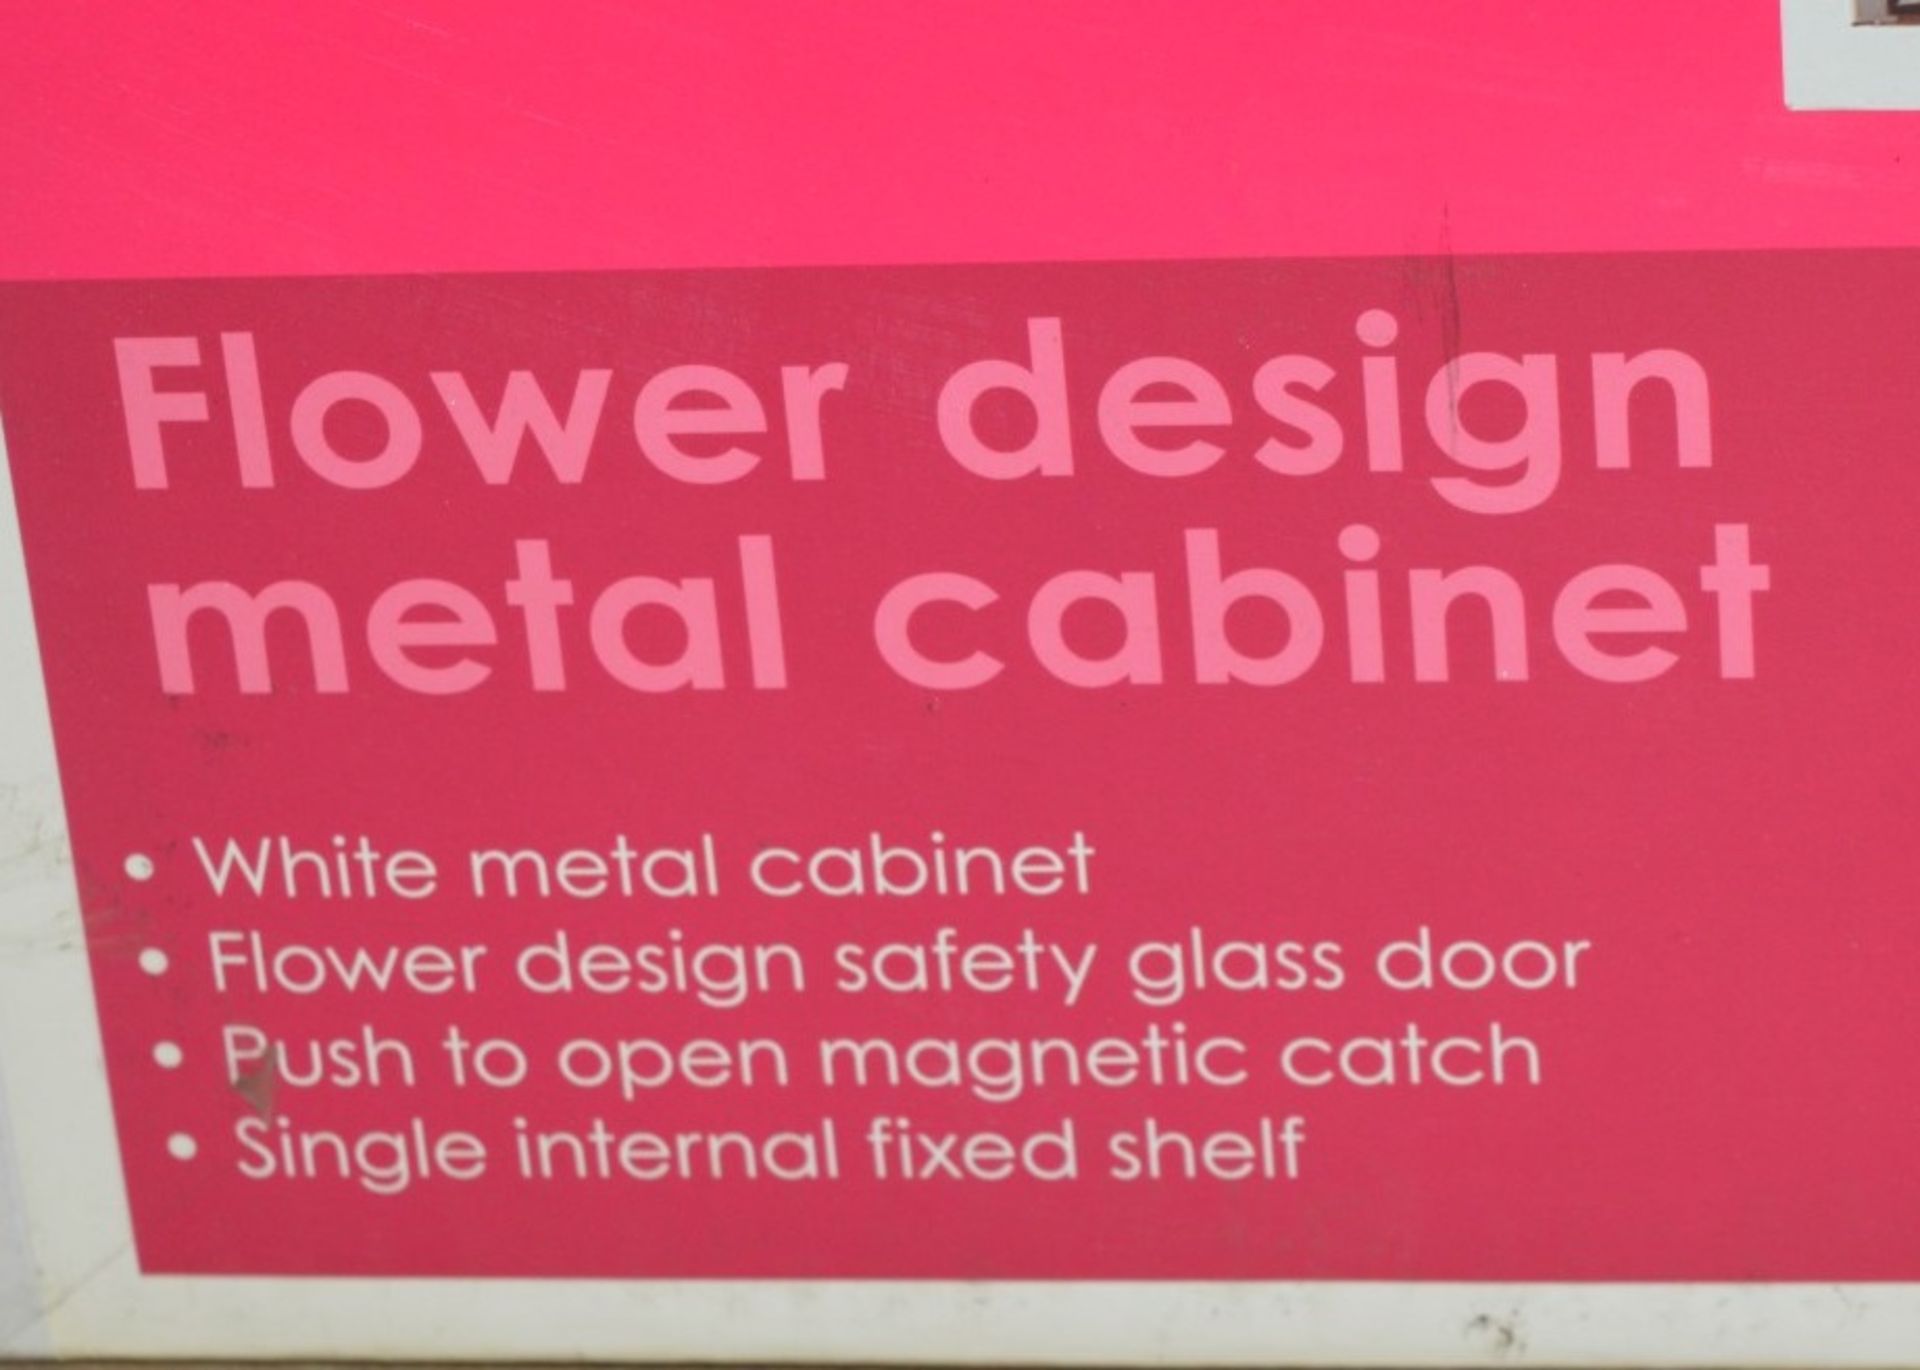 1 x B&Q Flower Design Metal Cabinet - White Metal Cabinet With Flower Design Safety Glass Door - - Image 3 of 4